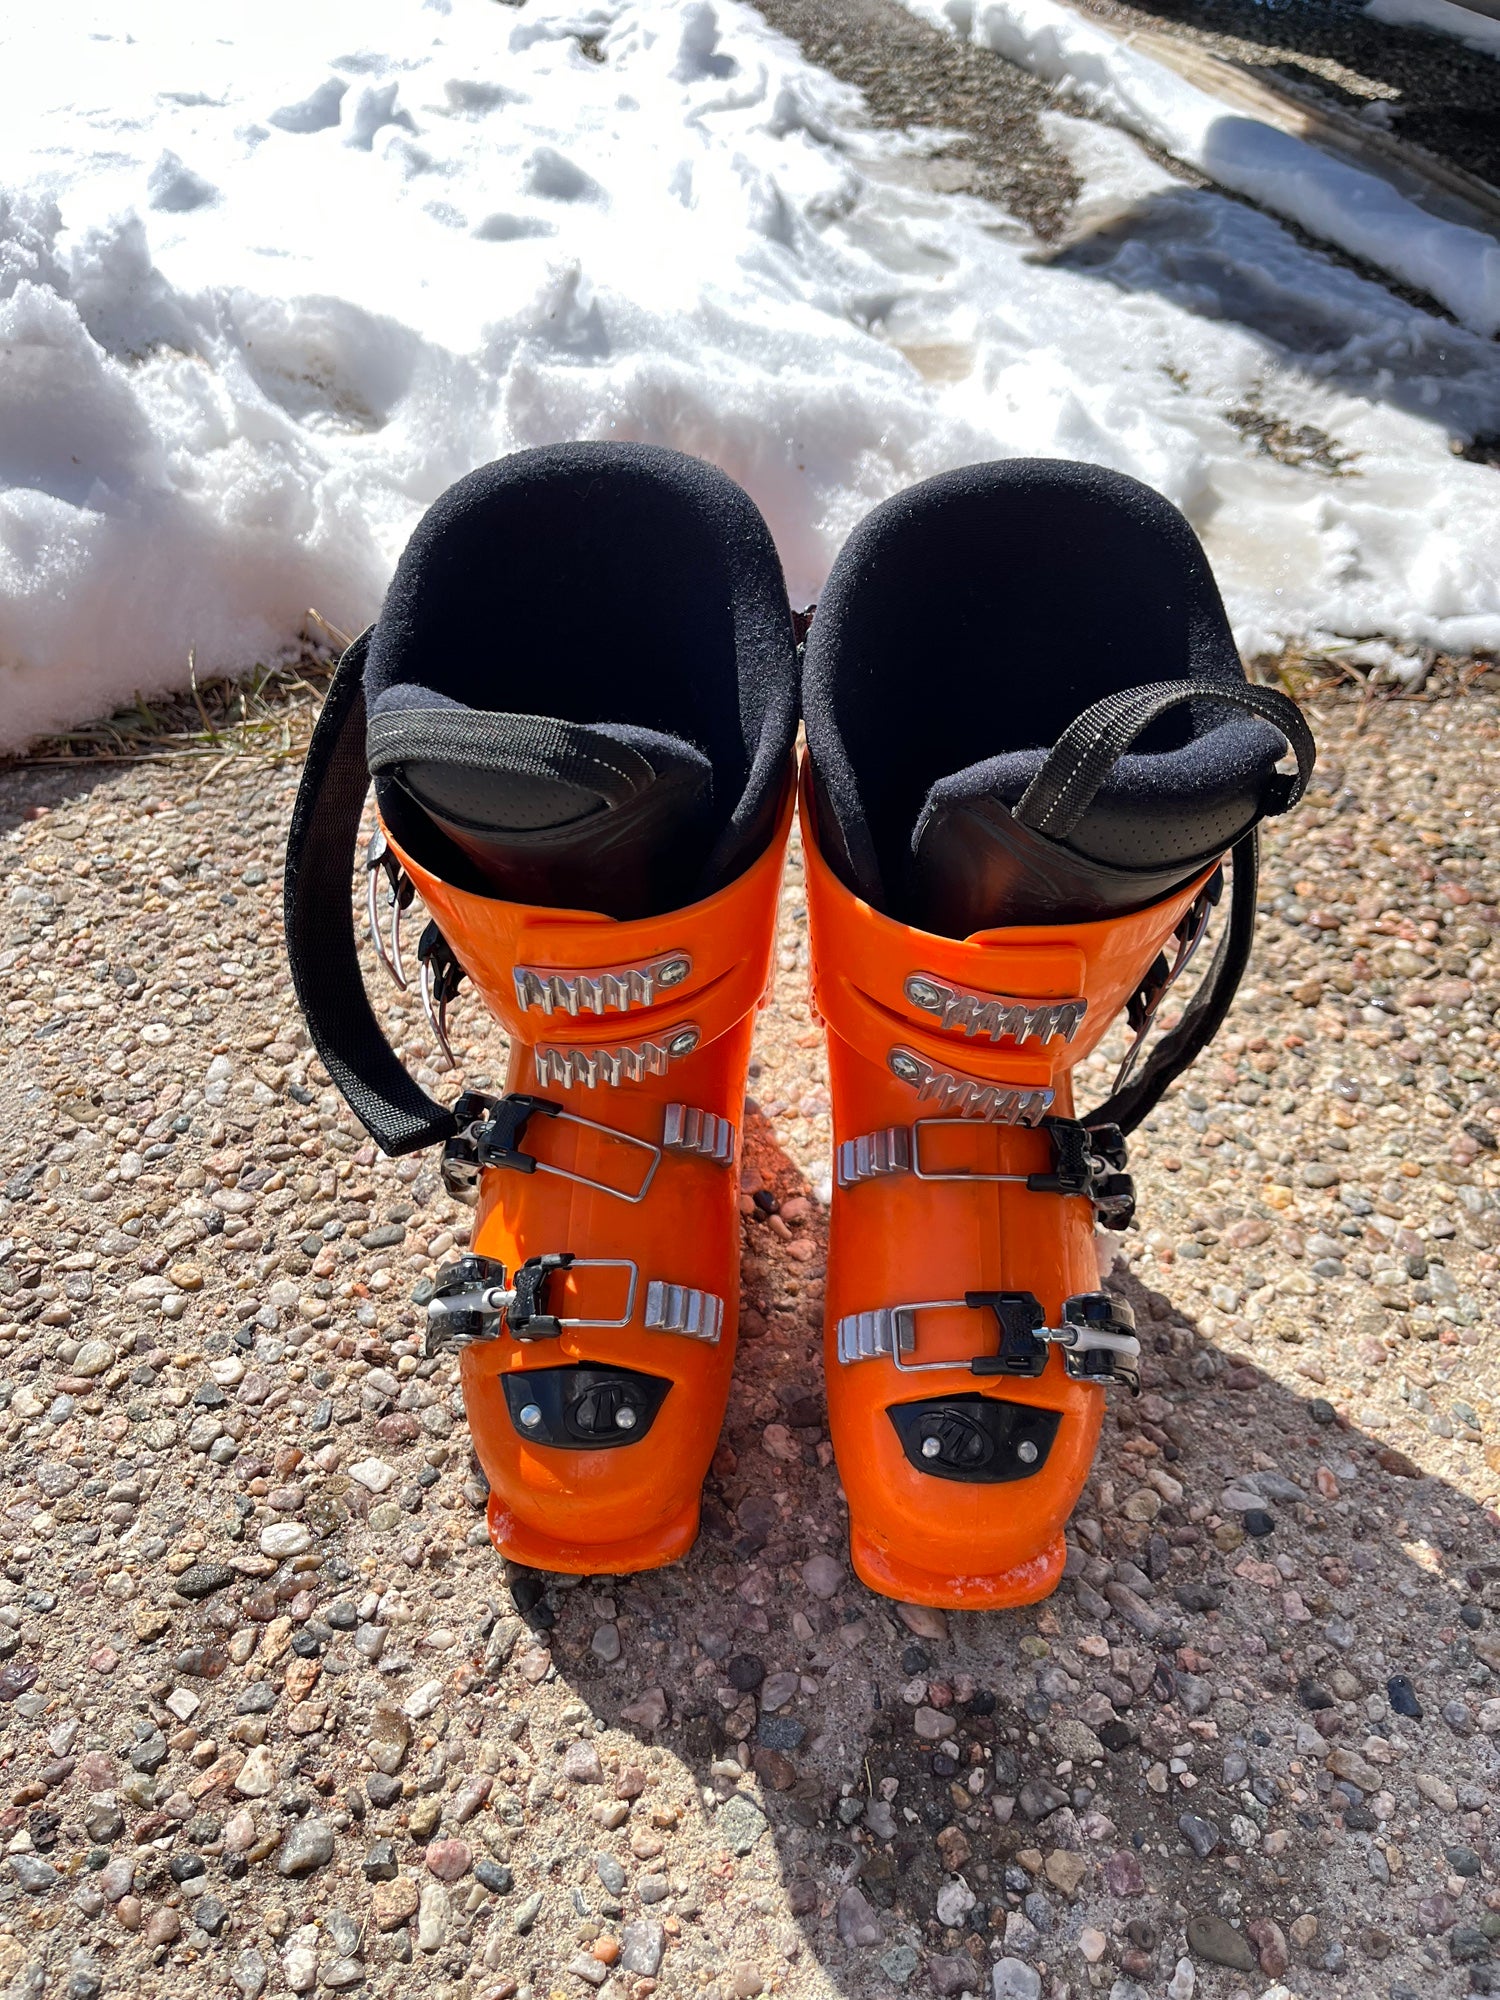 Unisex Tecnica Cochise Jr Ski Boots